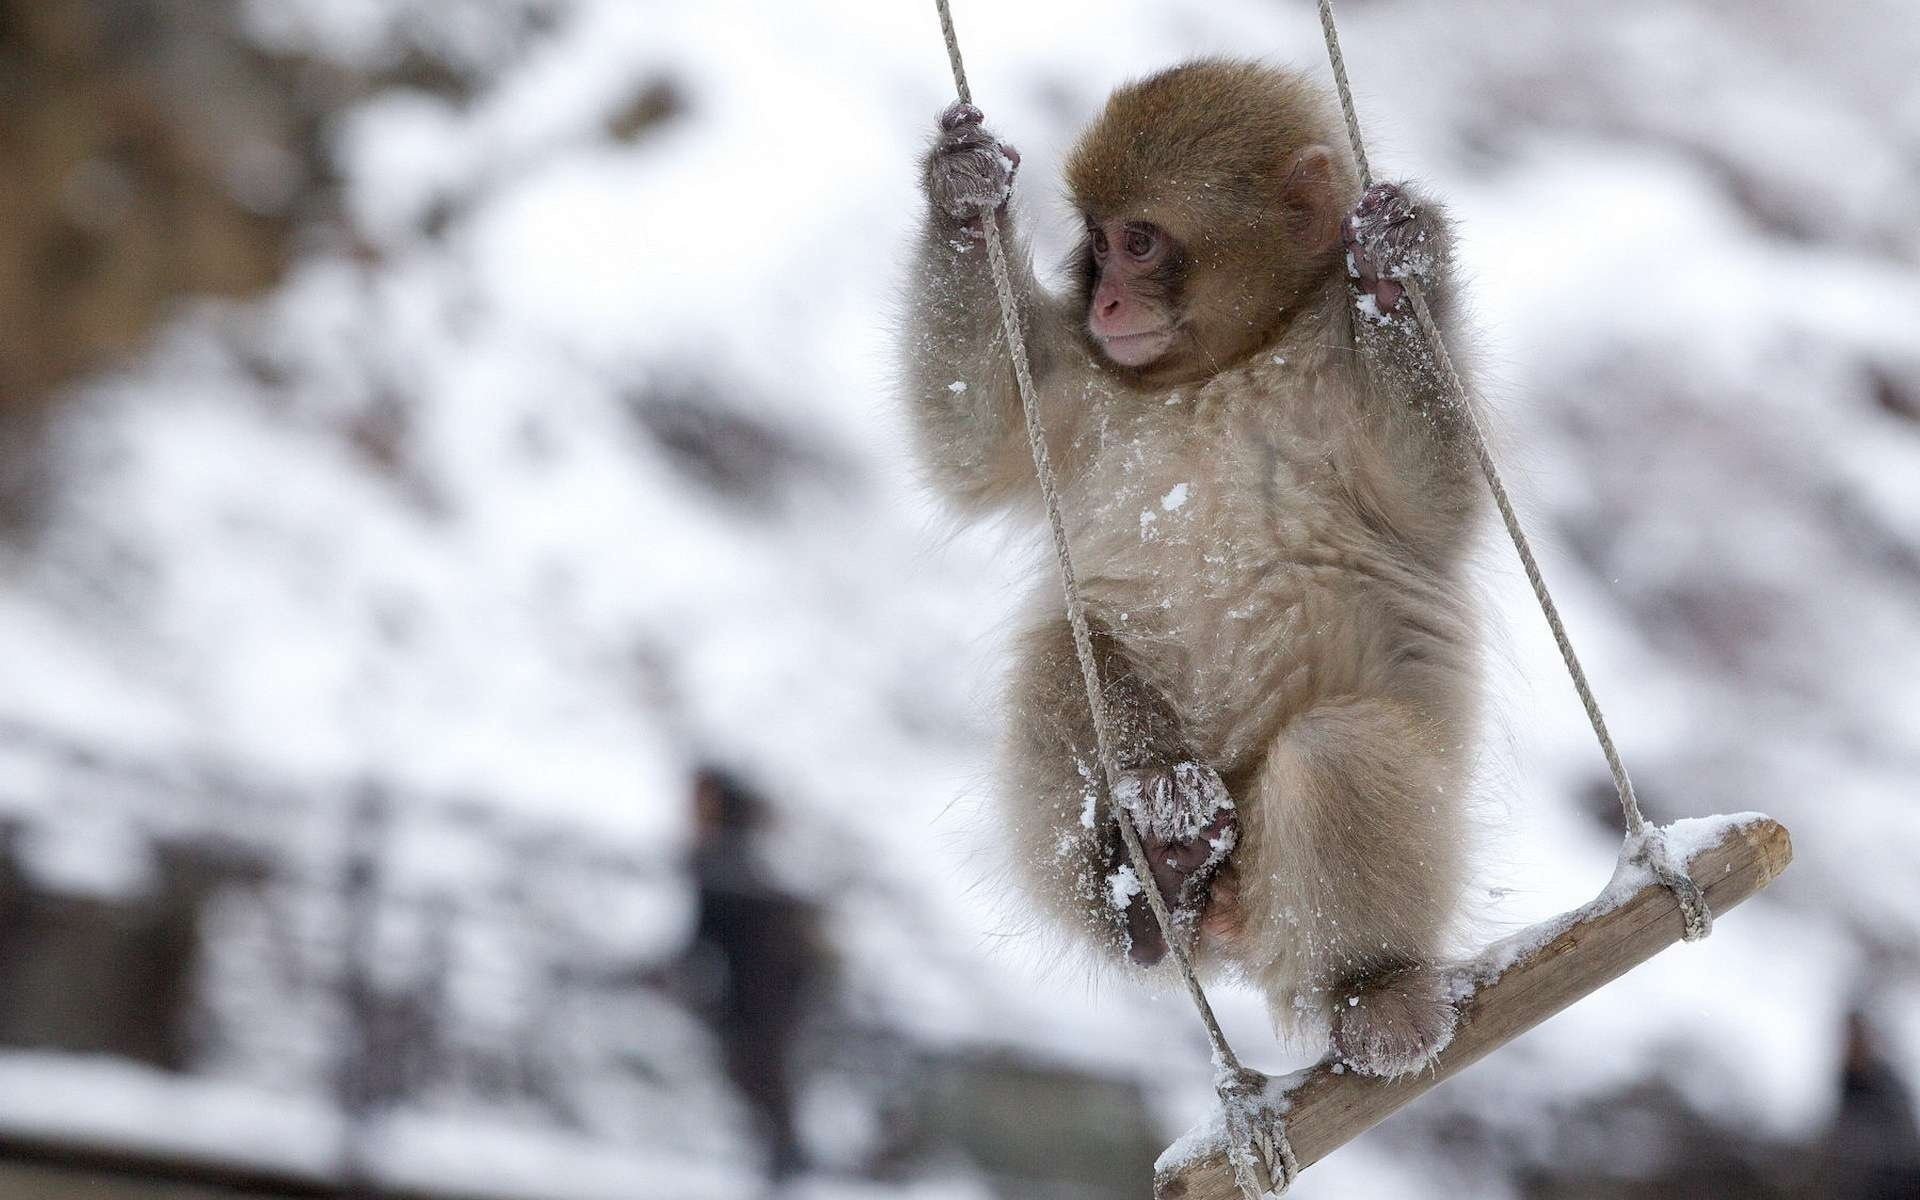 Winter photo of a monkey on a swing